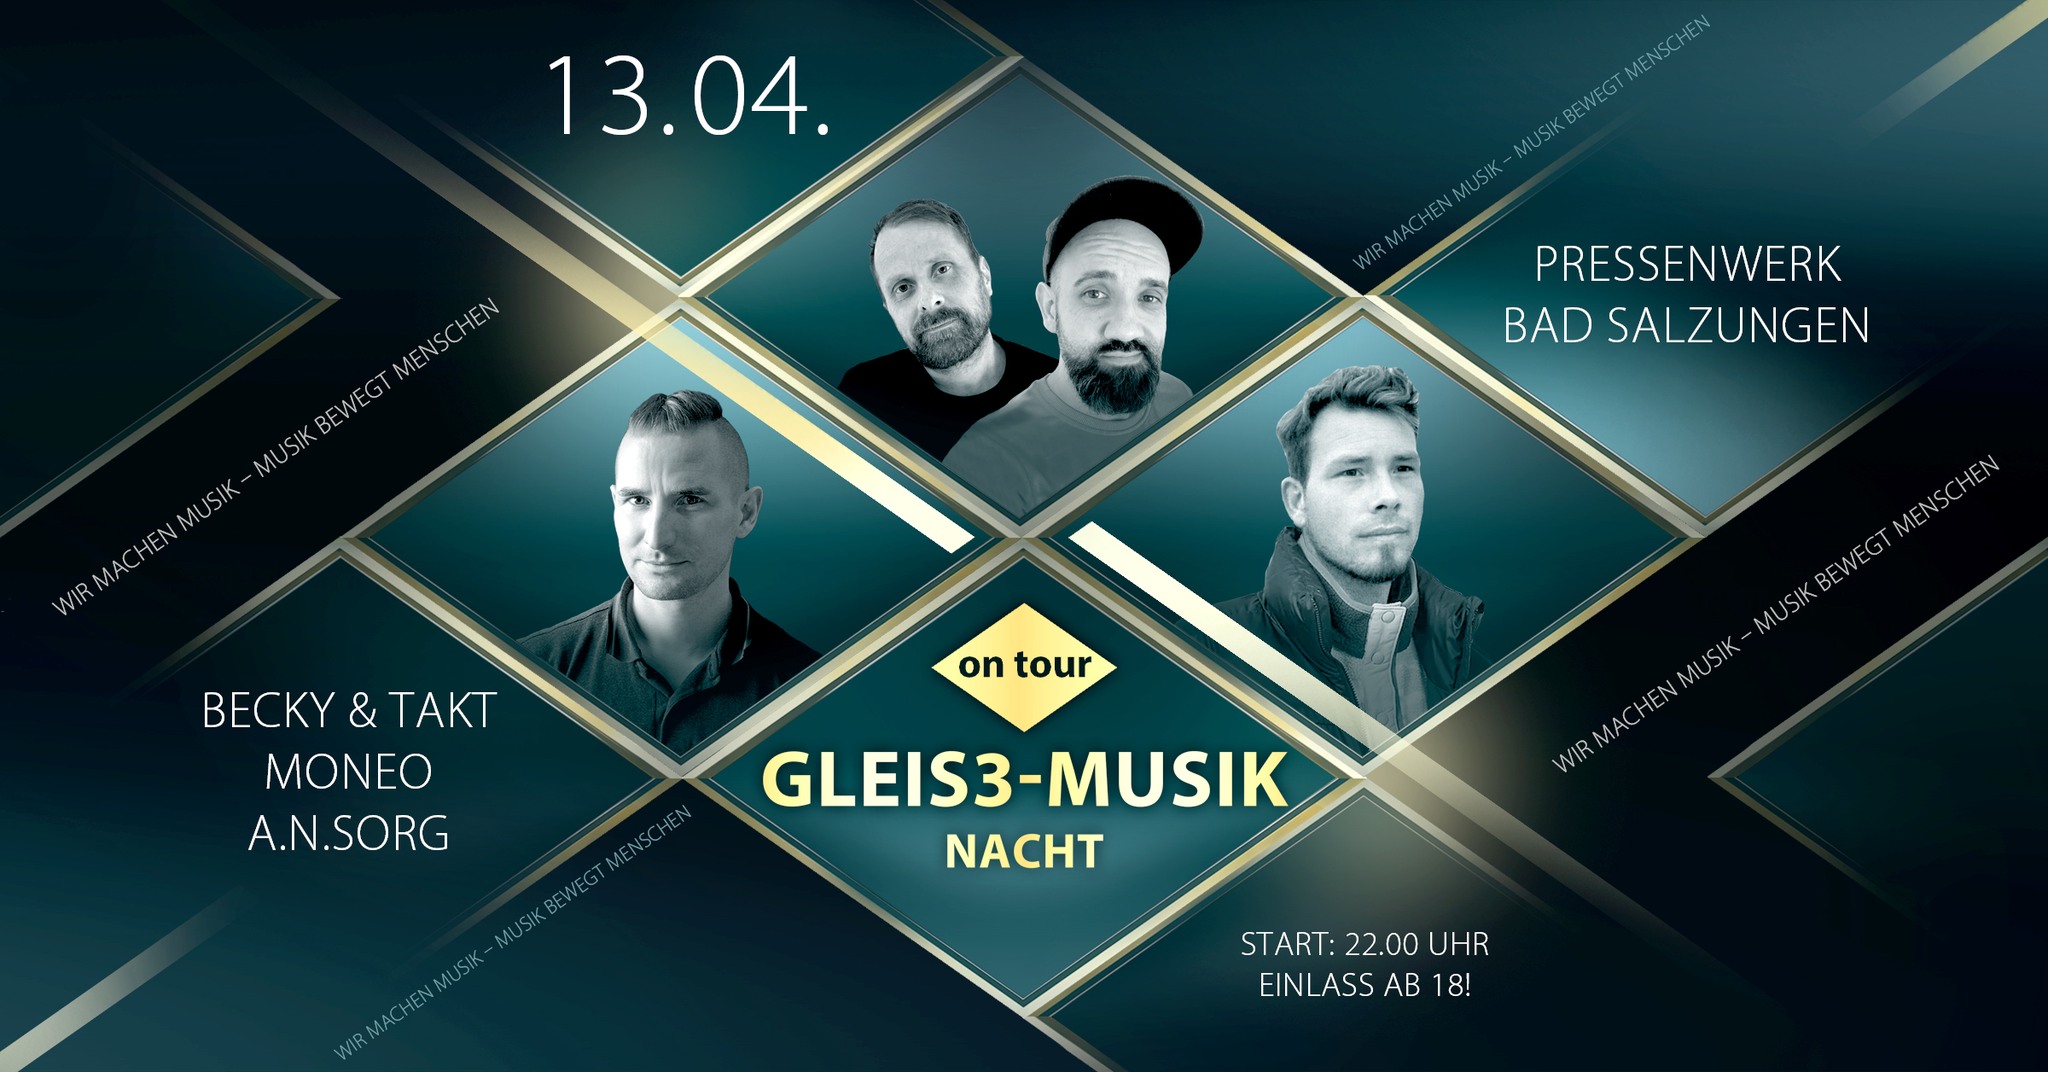 Gleis3-Musik Nacht on Tour